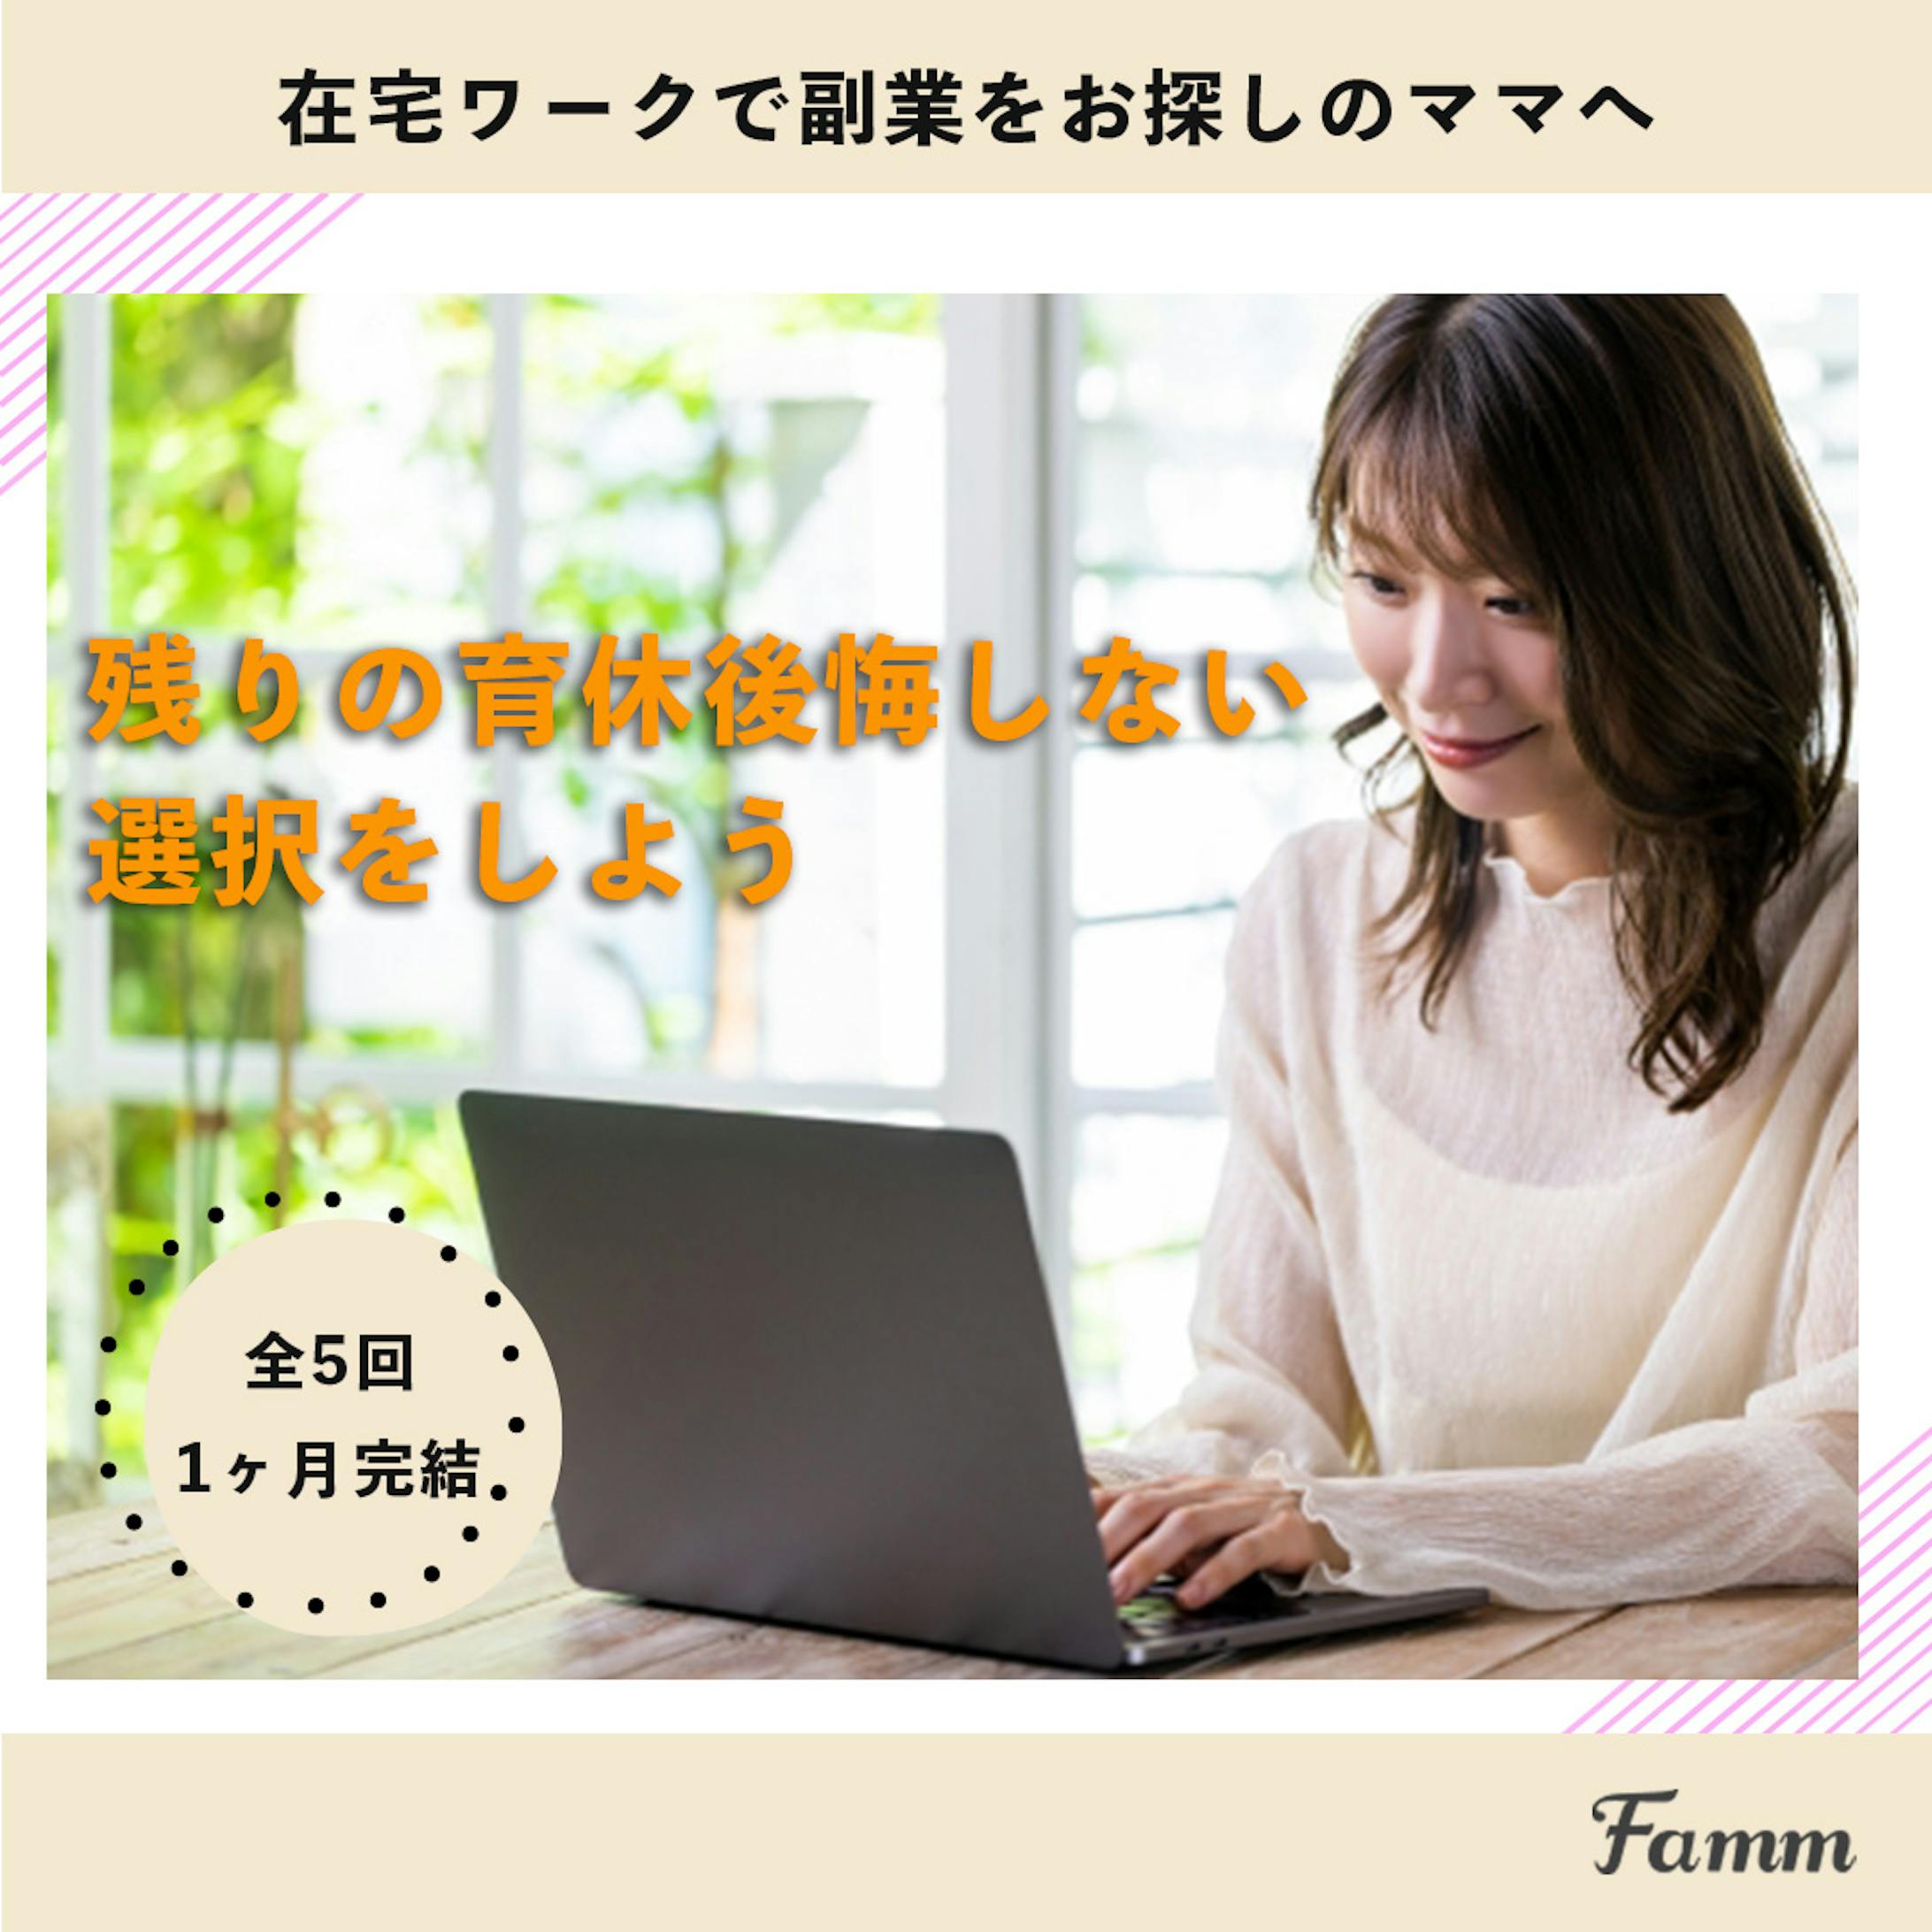 Famm様SNS用広告バナー-1